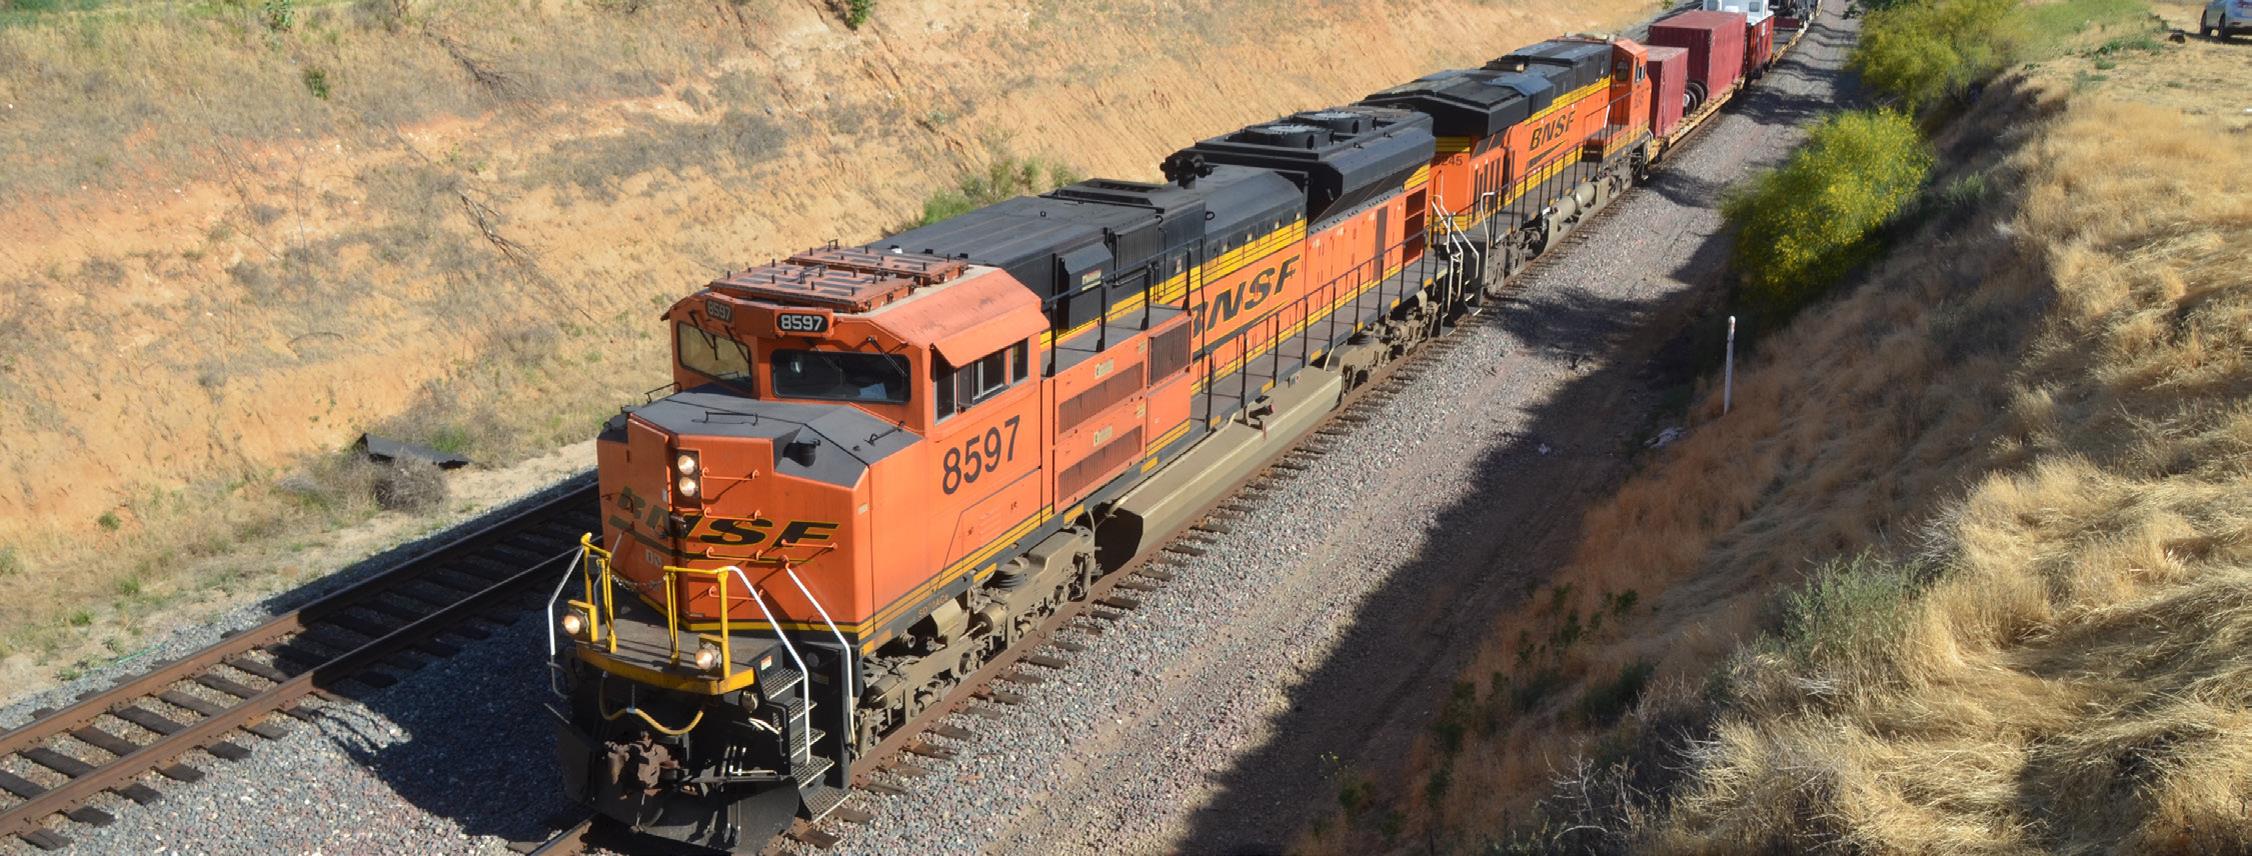 SD70ACe Diesel Locomotive - Burlington Northern Santa Fe (BNSF) #8597